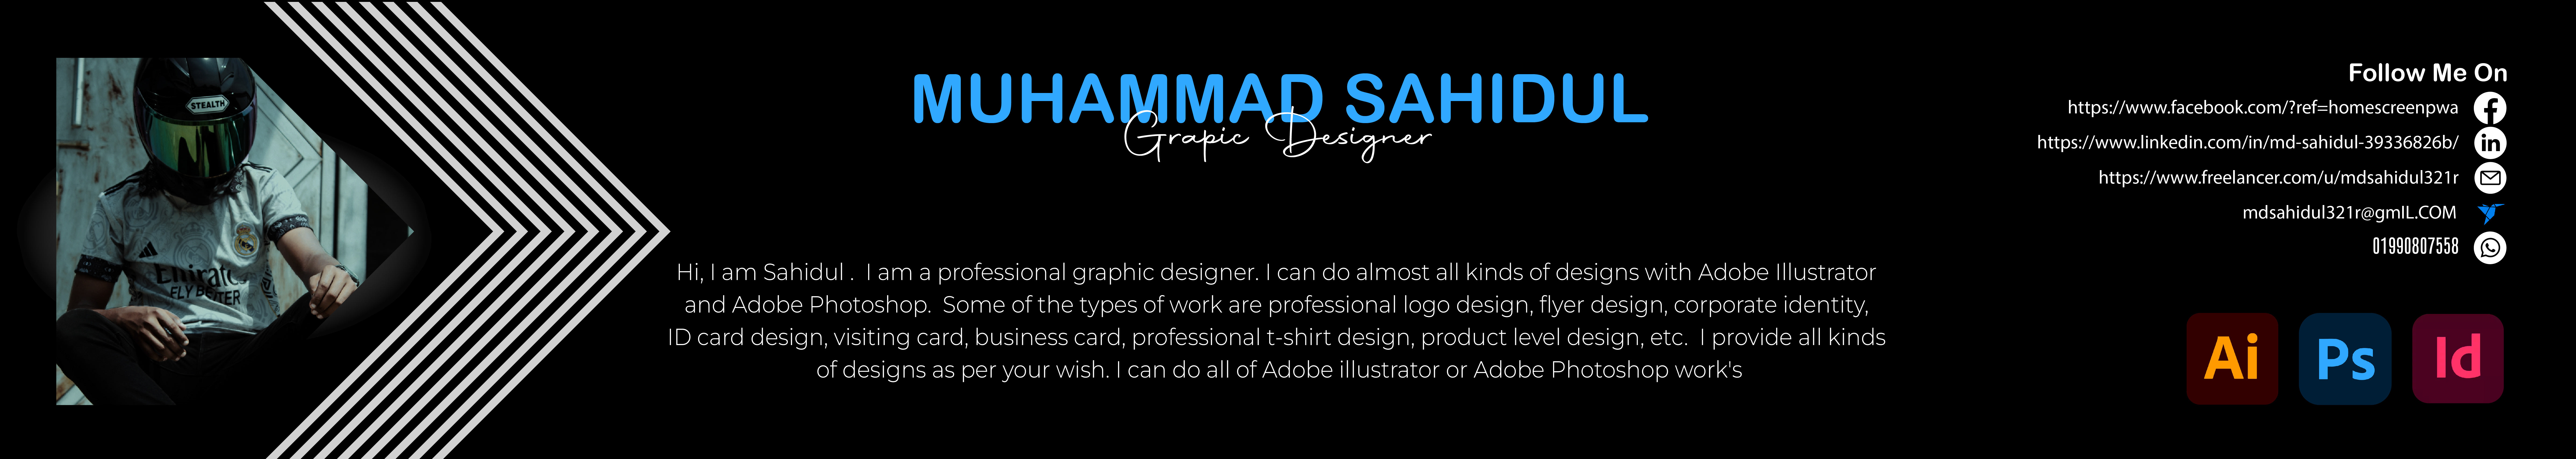 Banner de perfil de Muhammad Sahidul